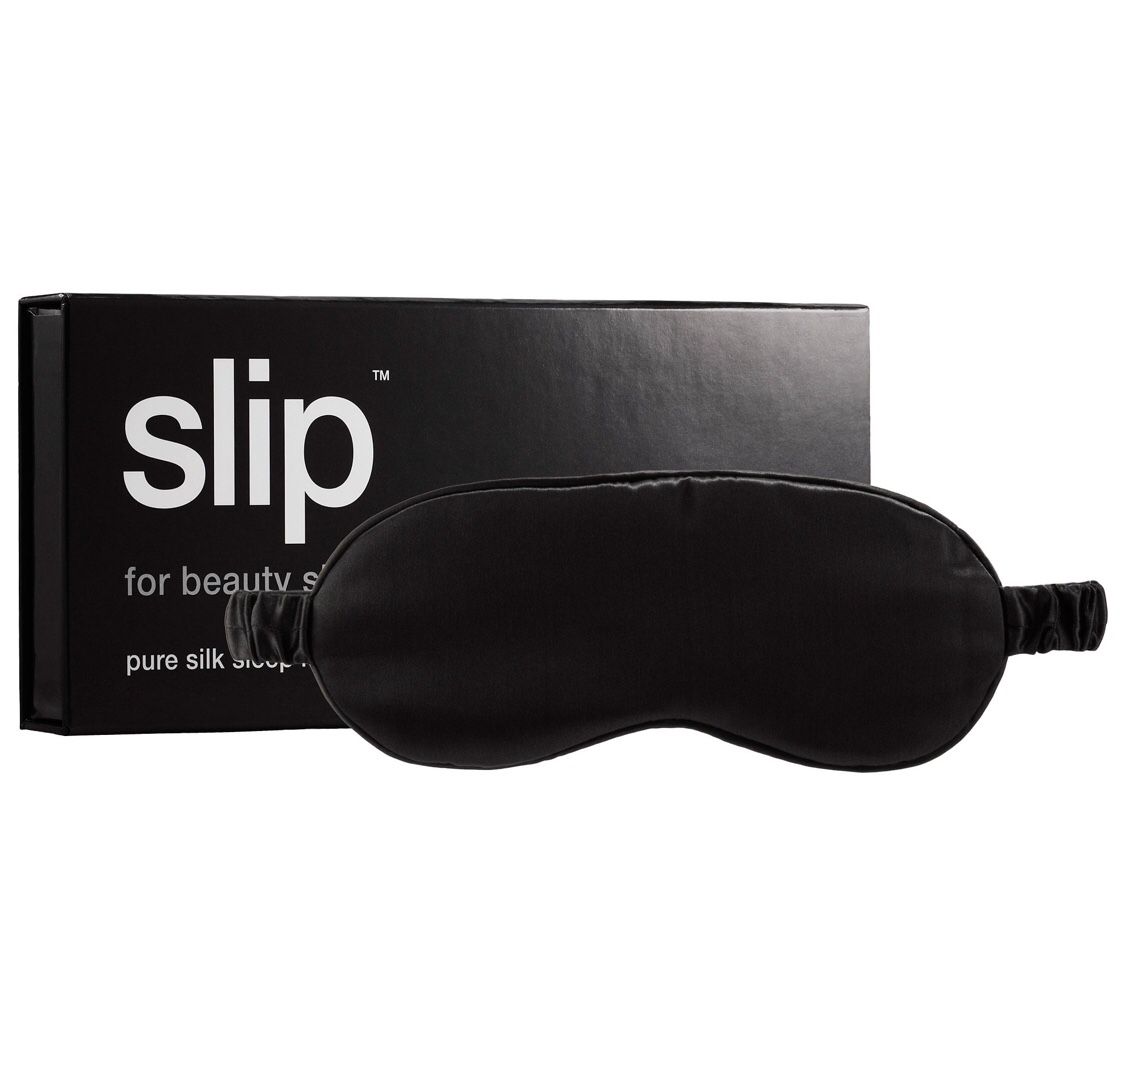 Slip pure silk sleep mask in black